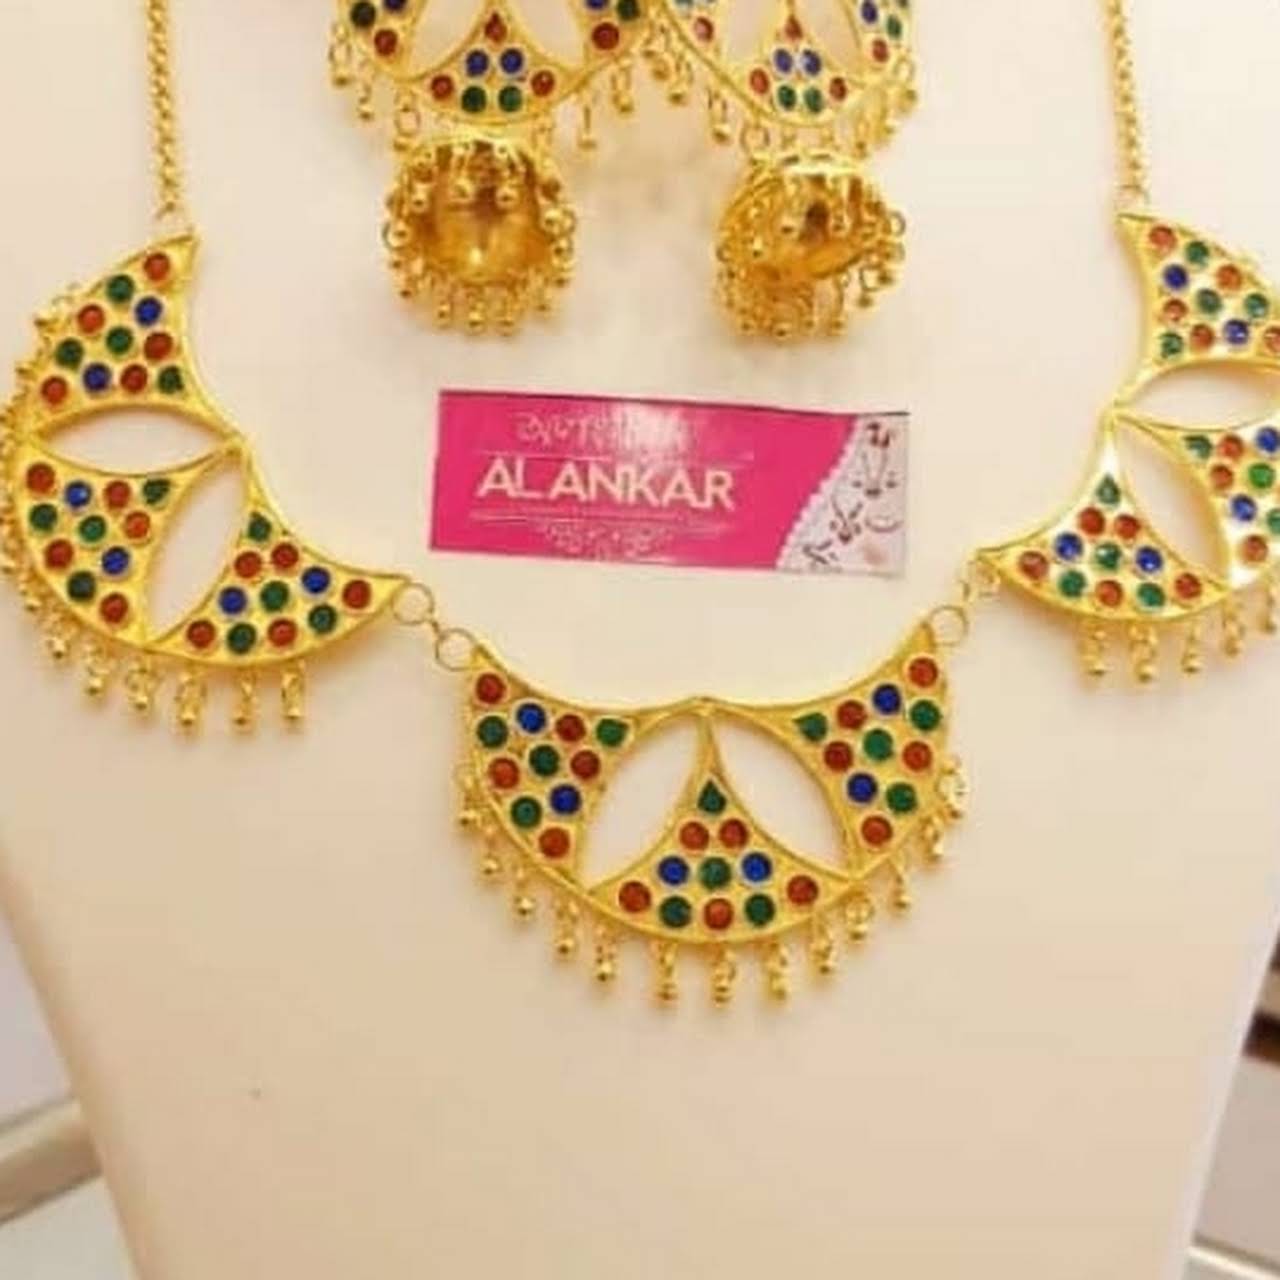  Alankar Assamese Traditional Jewellery